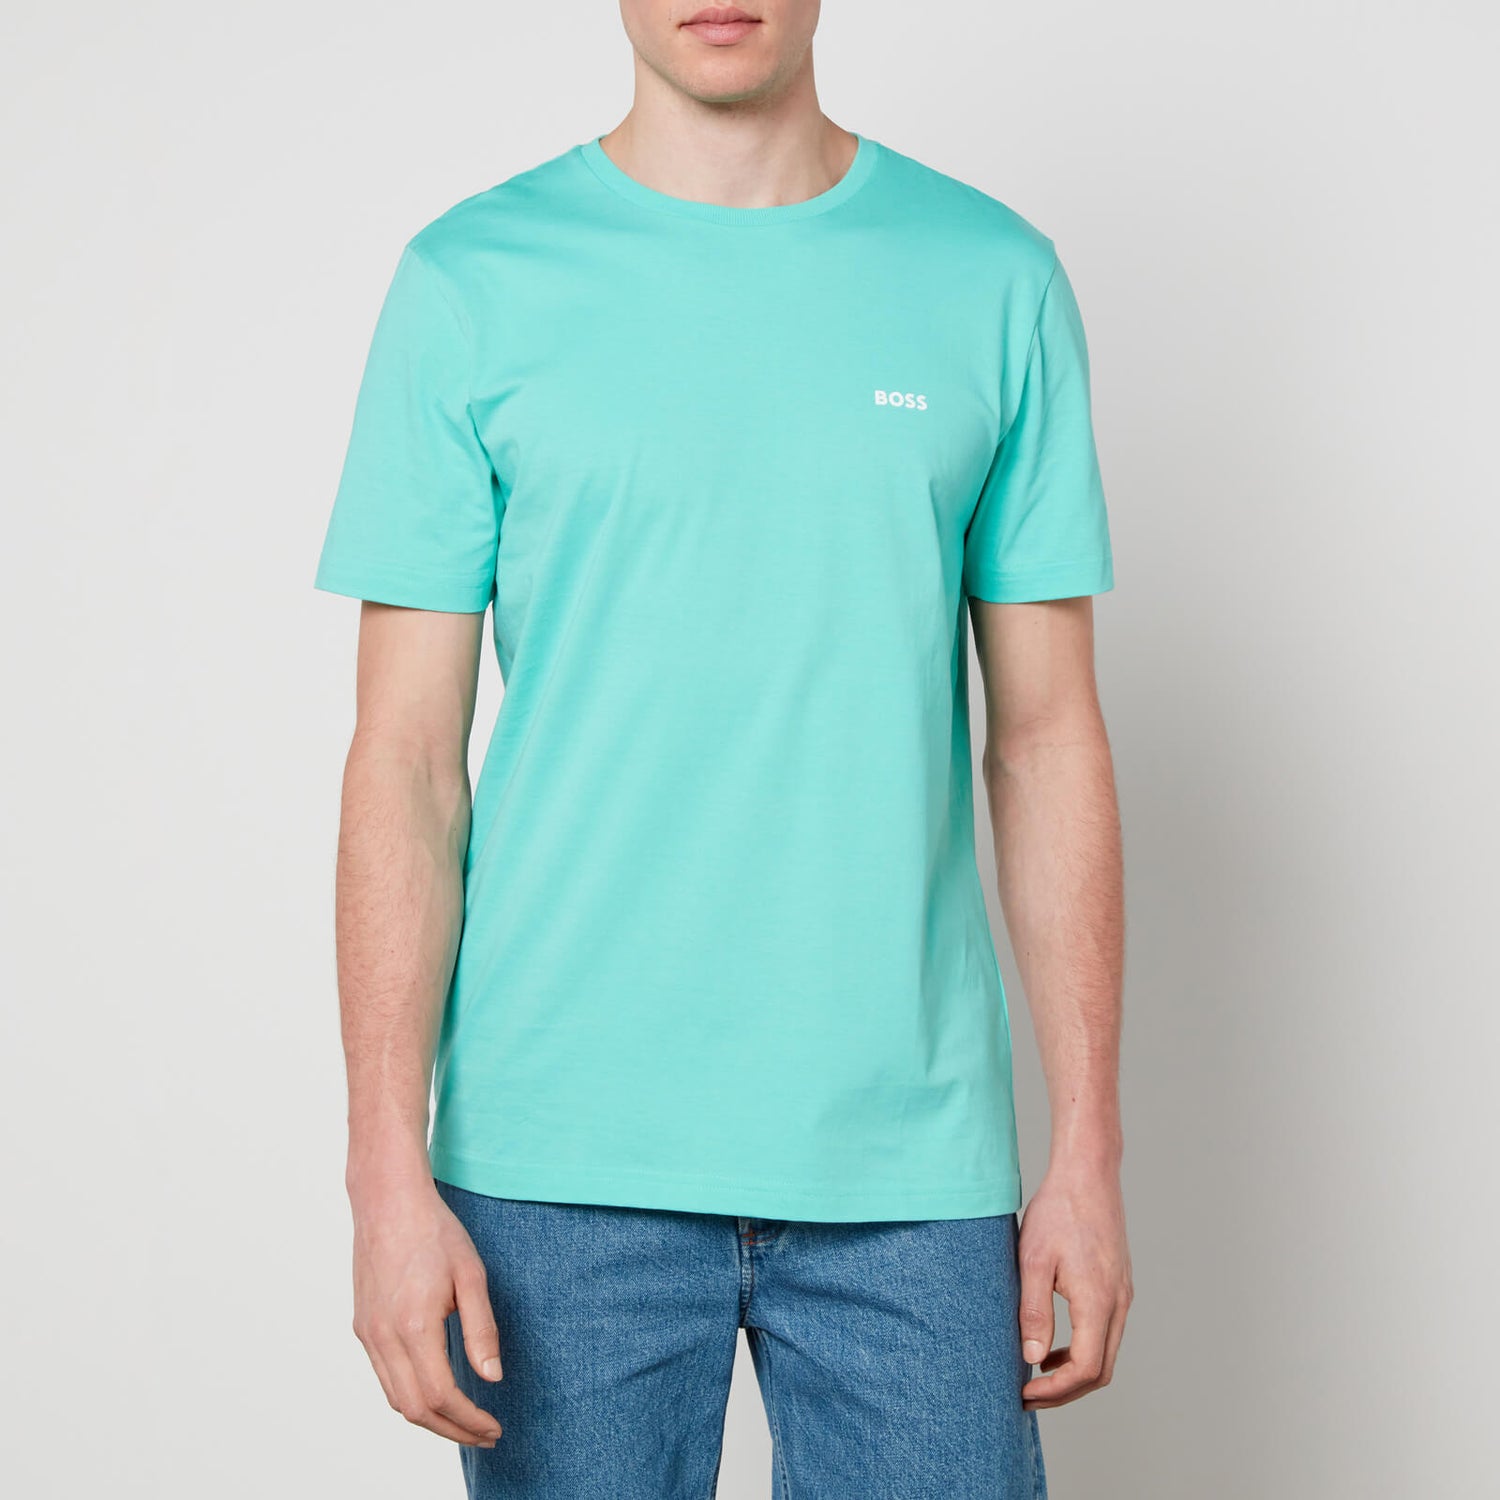 BOSS Tee 7 Cotton-Jersey Graphic T-Shirt - S